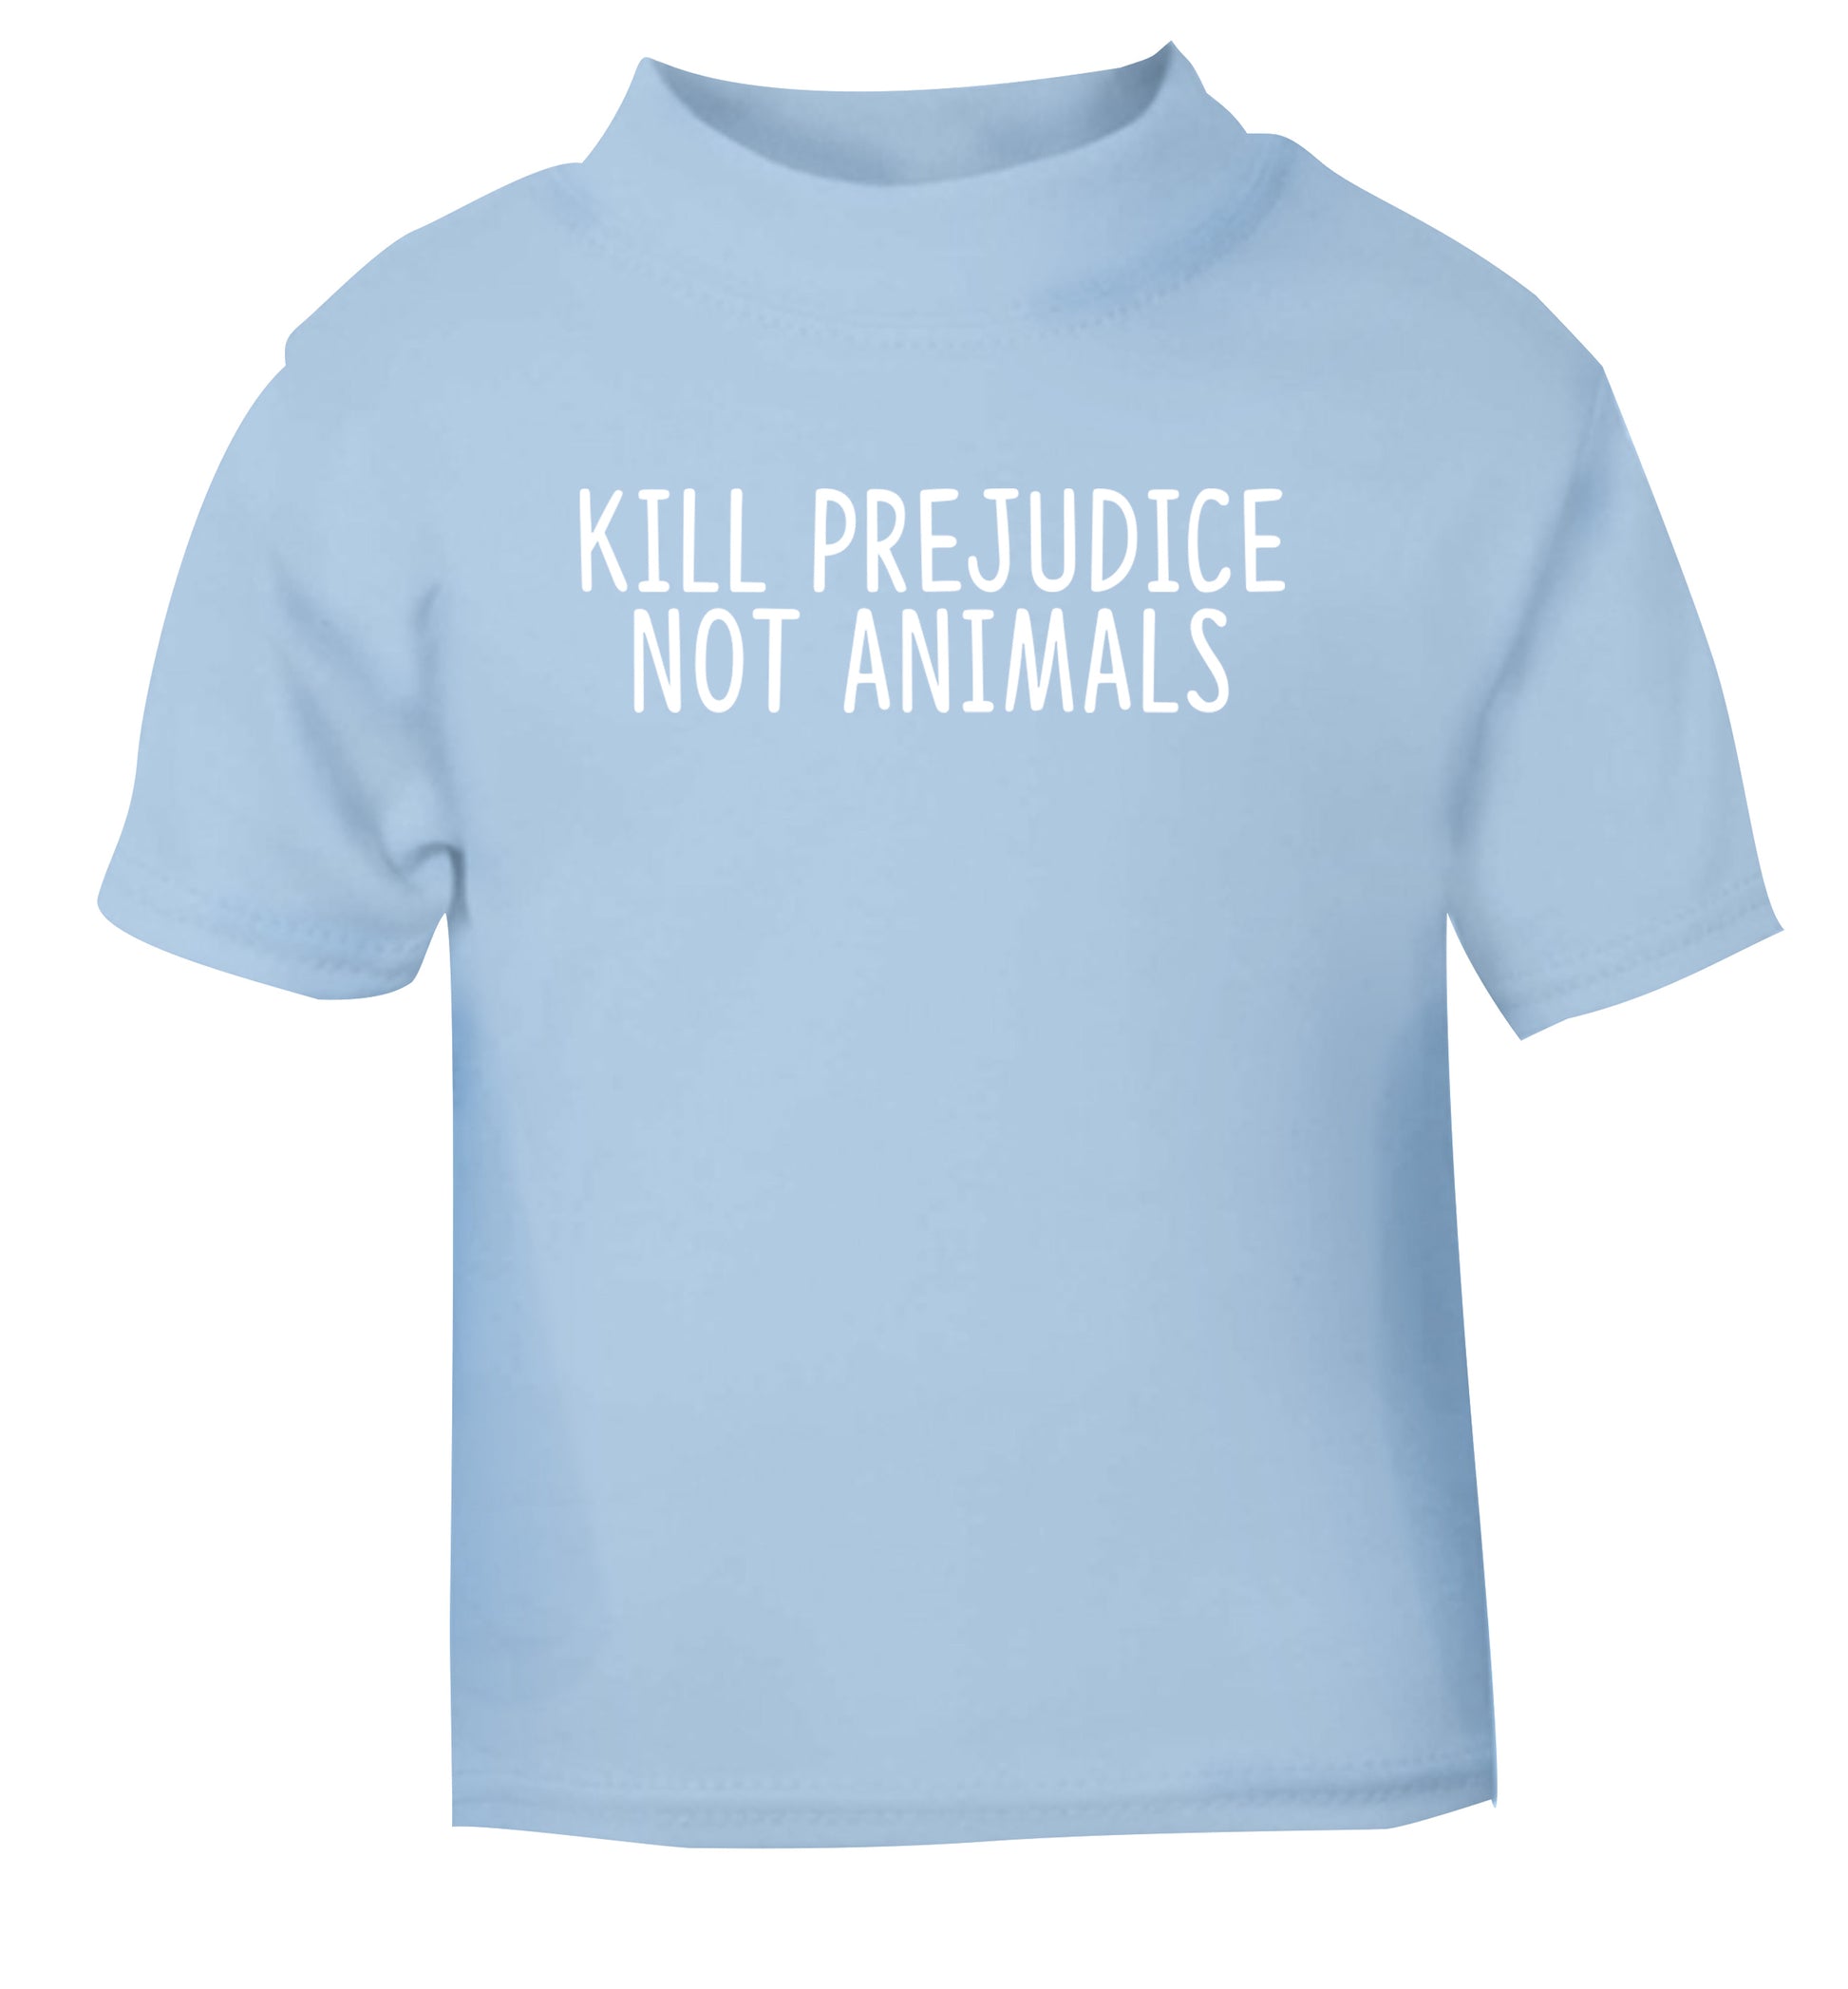 Kill Prejudice Not Animals light blue Baby Toddler Tshirt 2 Years